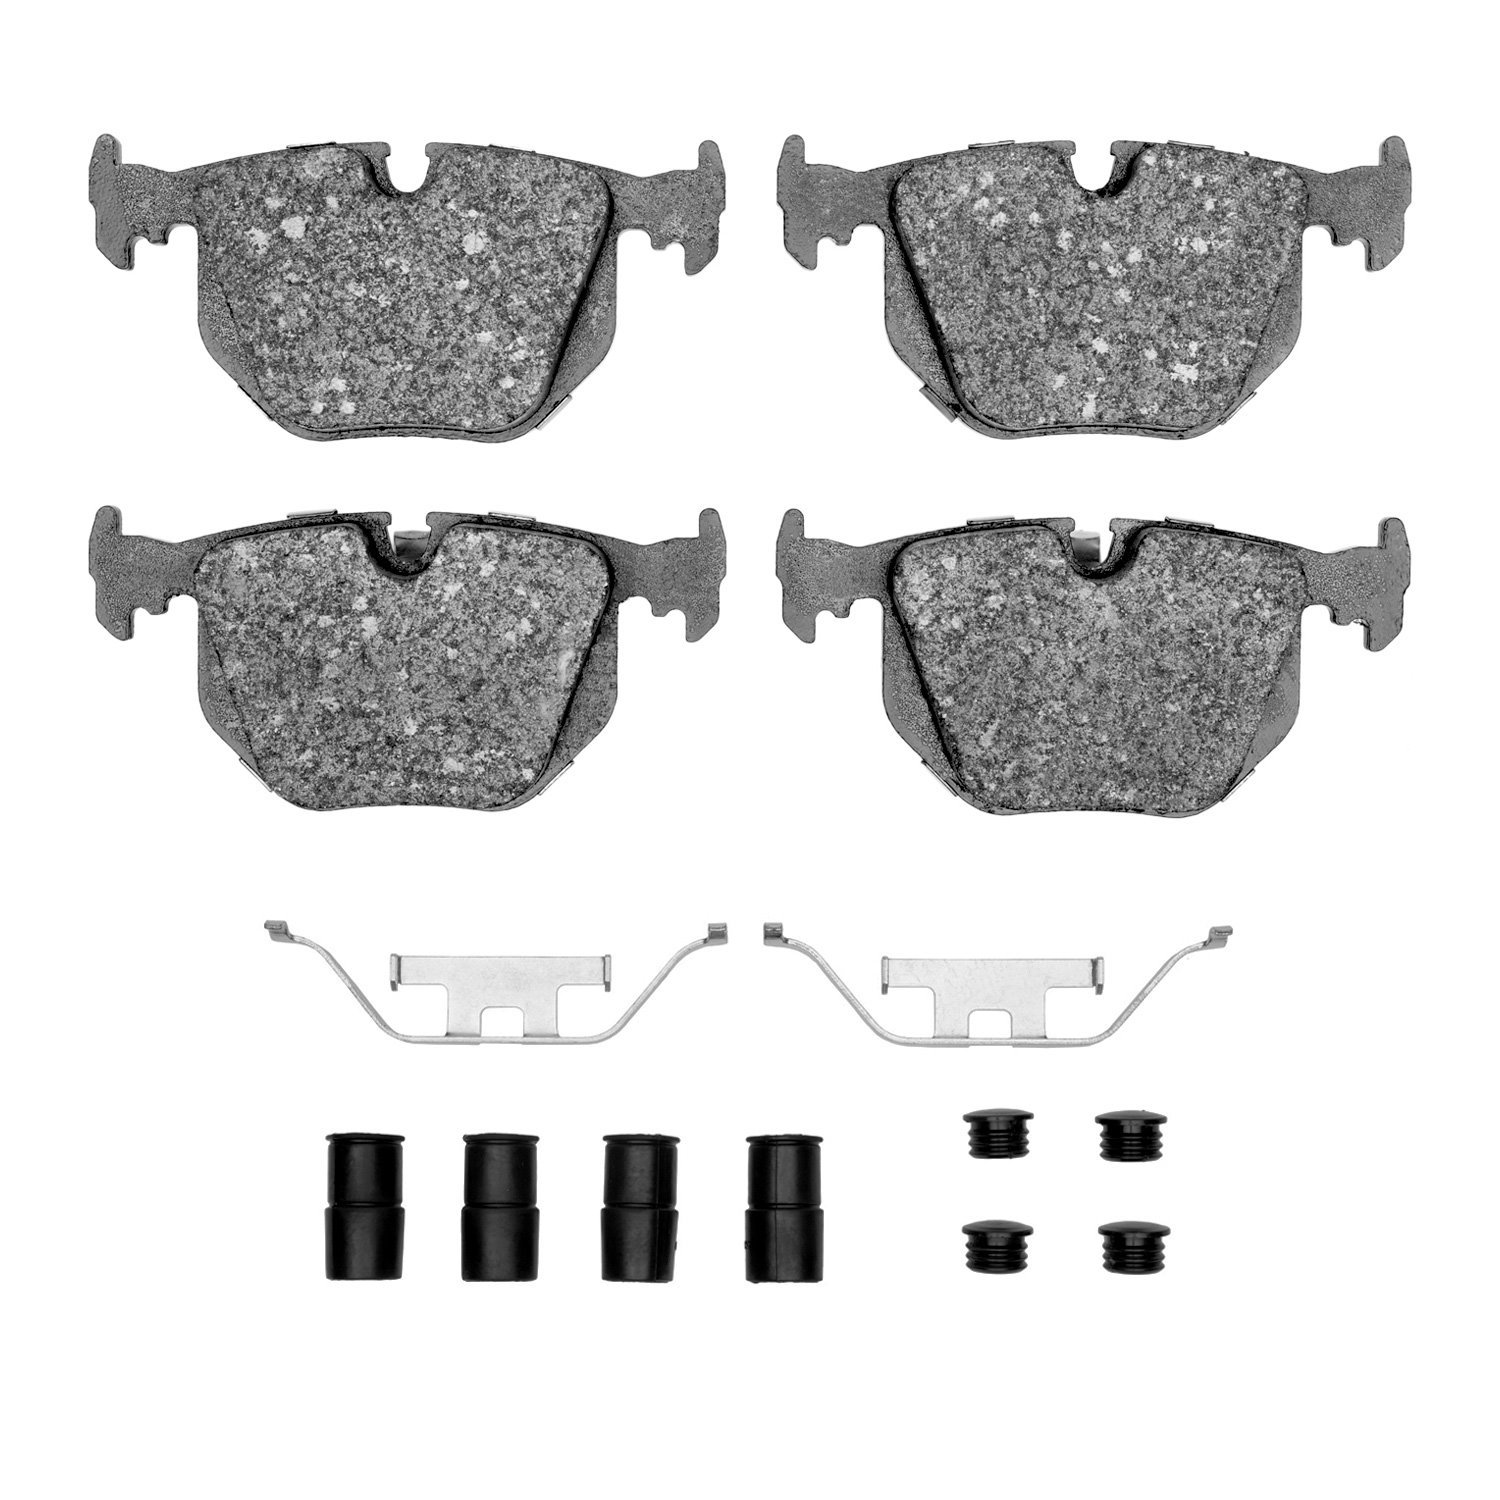 1600-0683-01 5000 Euro Ceramic Brake Pads & Hardware Kit, 1991-2010 Multiple Makes/Models, Position: Rear